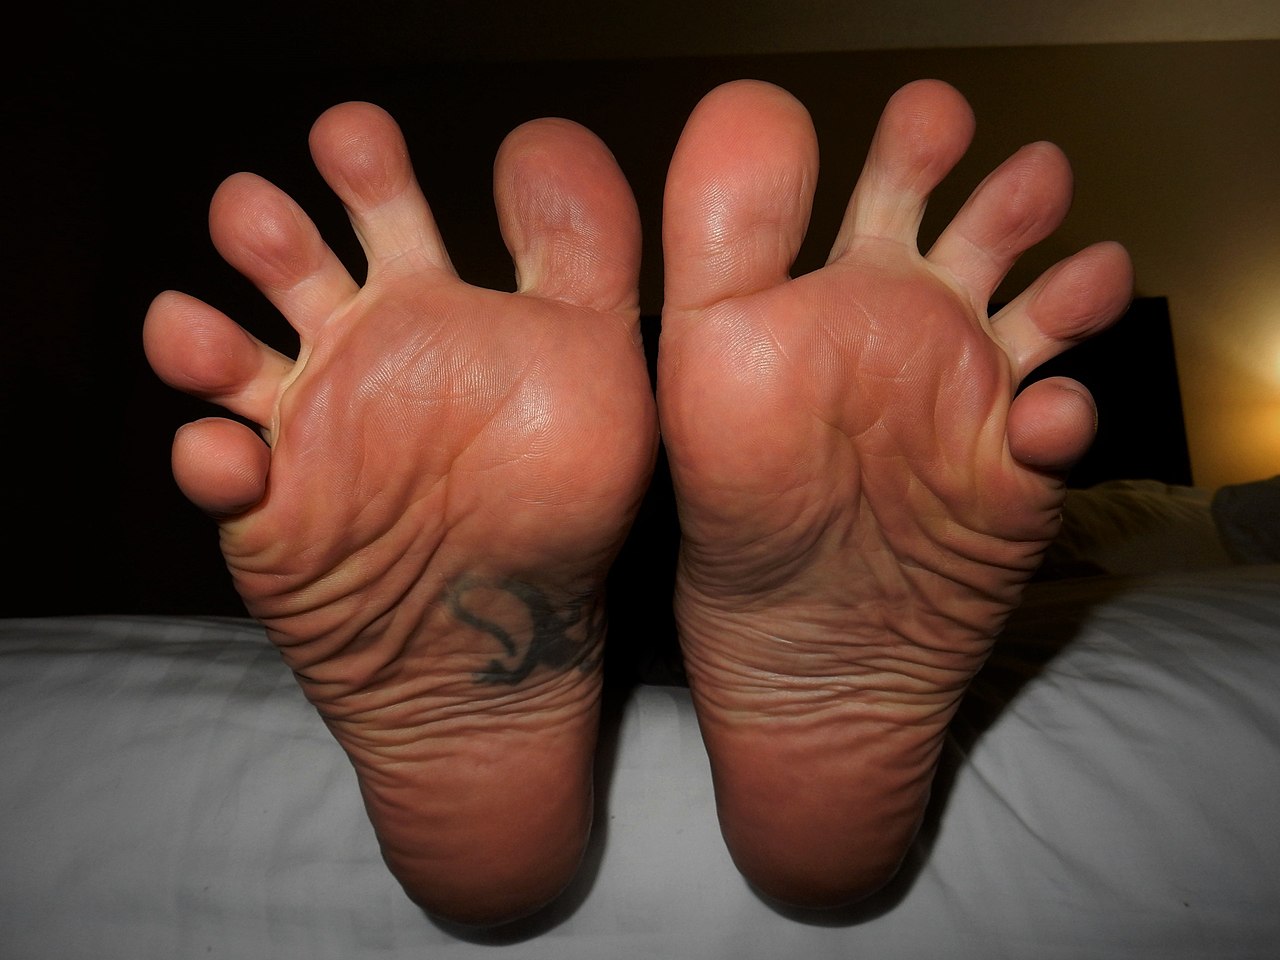 File:Soles of Bare Feet.jpg - Wikimedia Commons